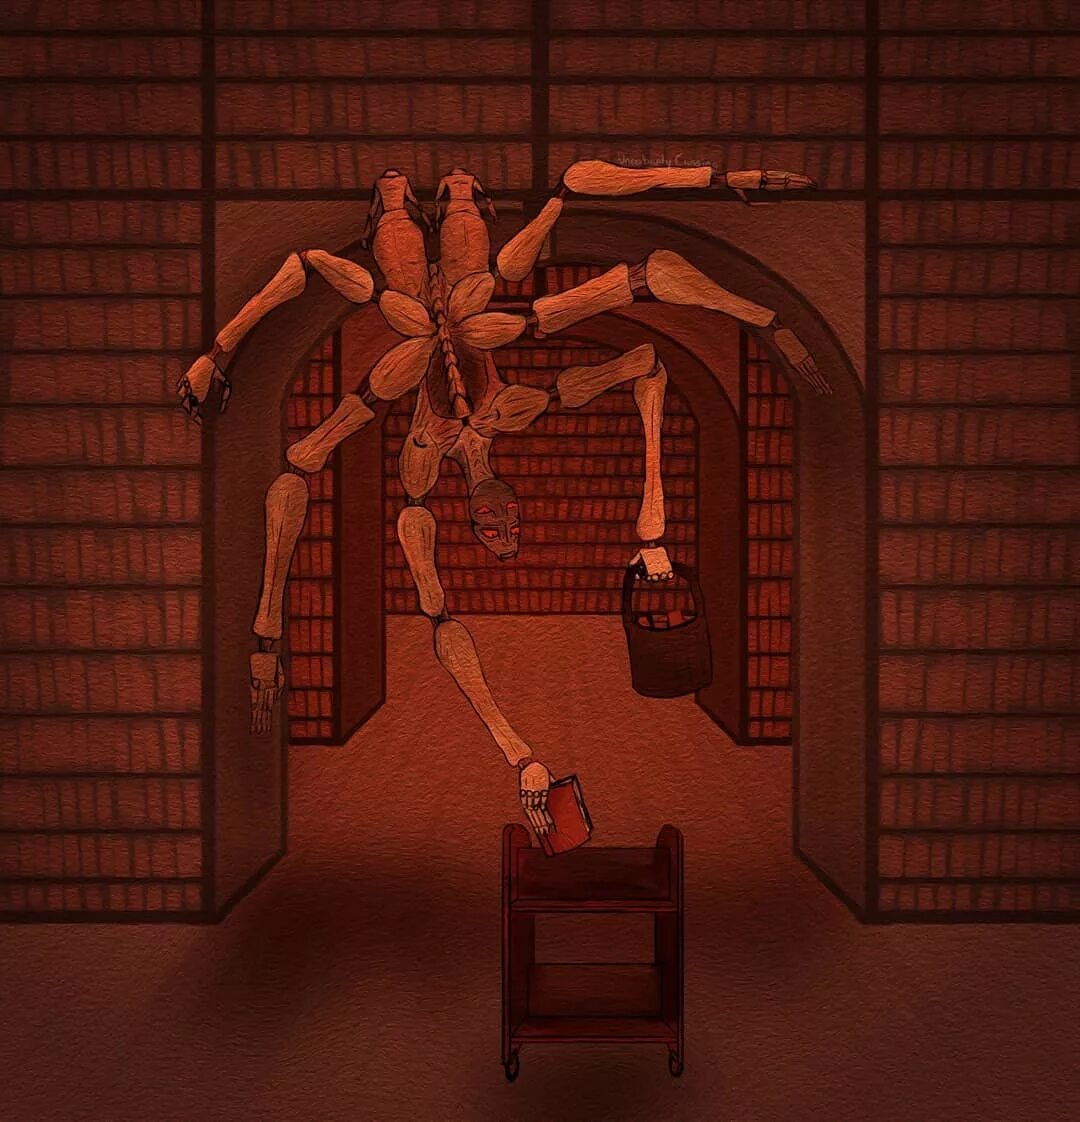 Lander Gatekeeper в Instagram: "A Page from the Wanderer's Librar...